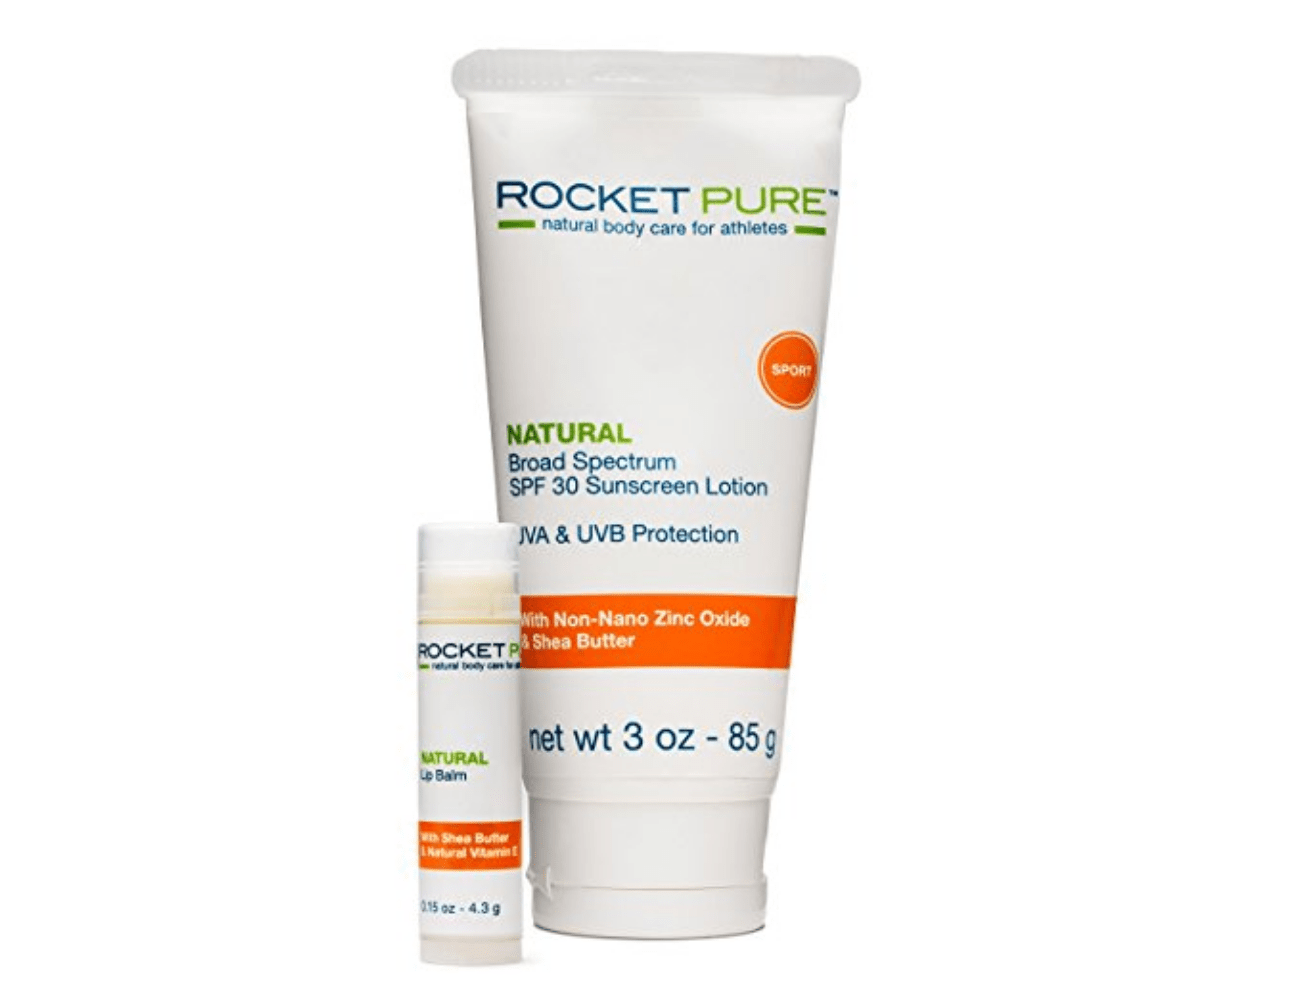 Rocket Pure sunscreen